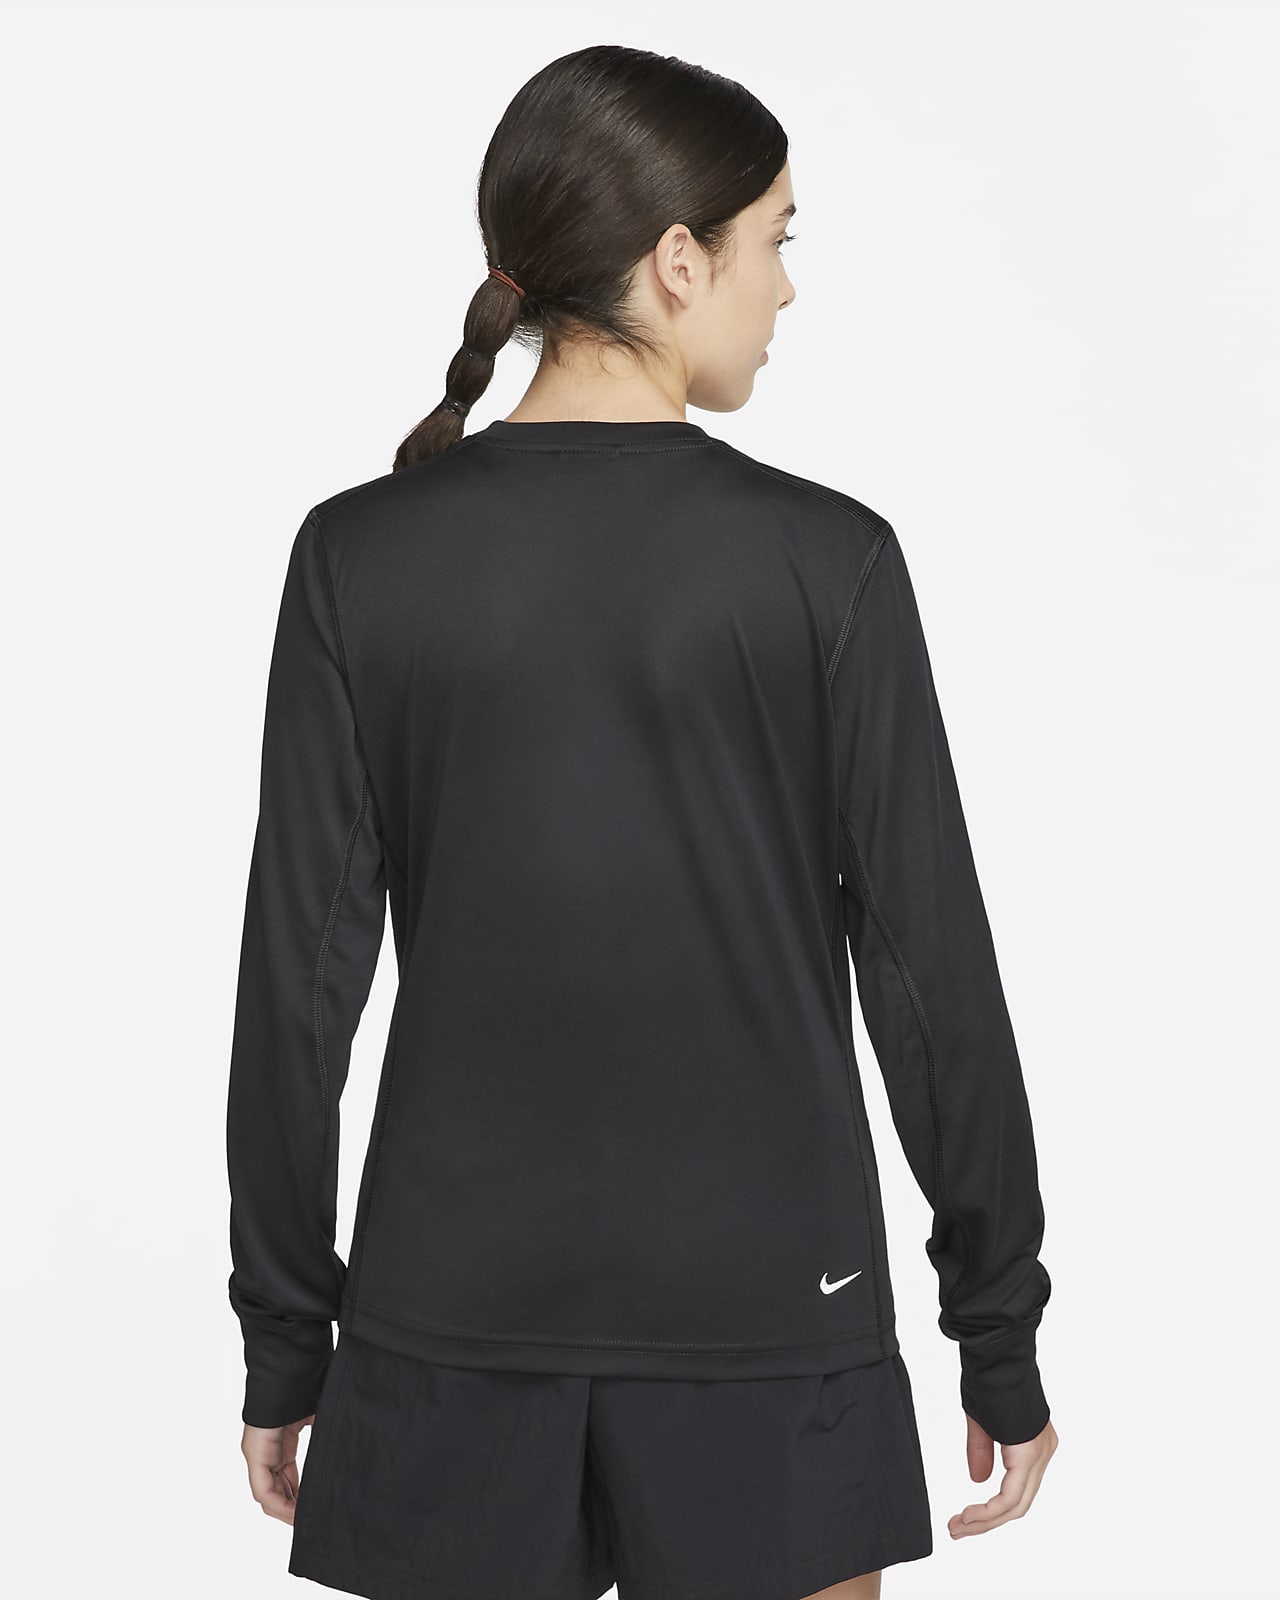 ACG Dri-FIT ADV 'Goat Rocks' Women's Top. Nike